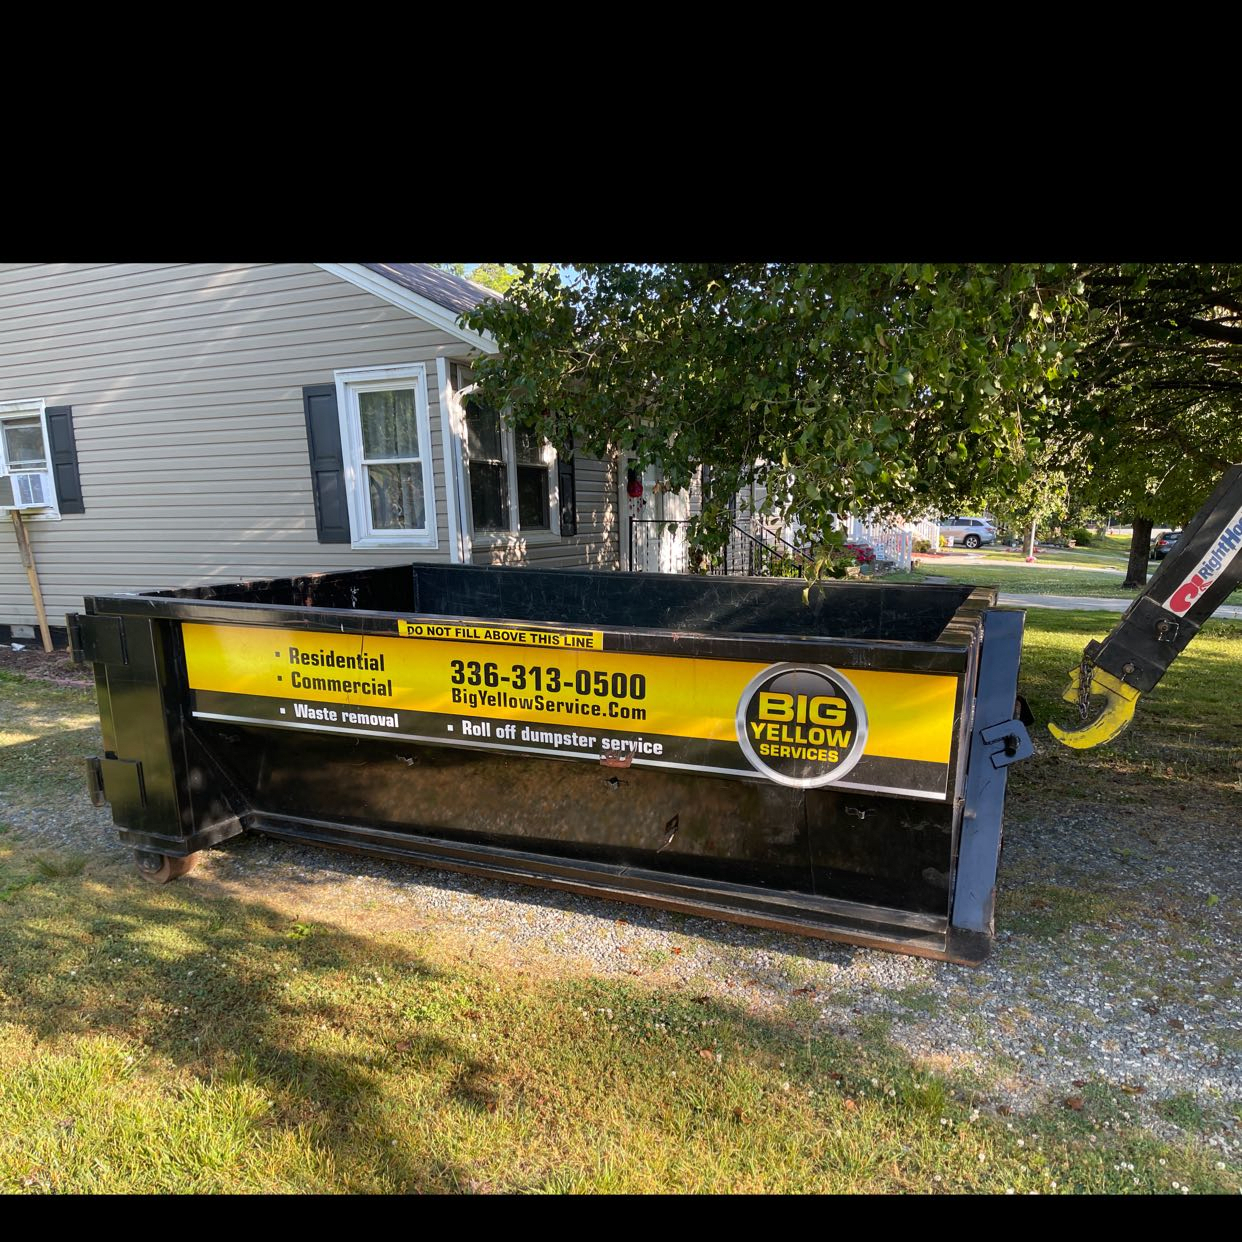 A-519 Piedmont Way Burlington, NC 27217 (2) Dumpster Rental in Burlington, NC  | Roll-Off Dumpster and Portable Toilet Rentals | Big Yellow Services, LLC